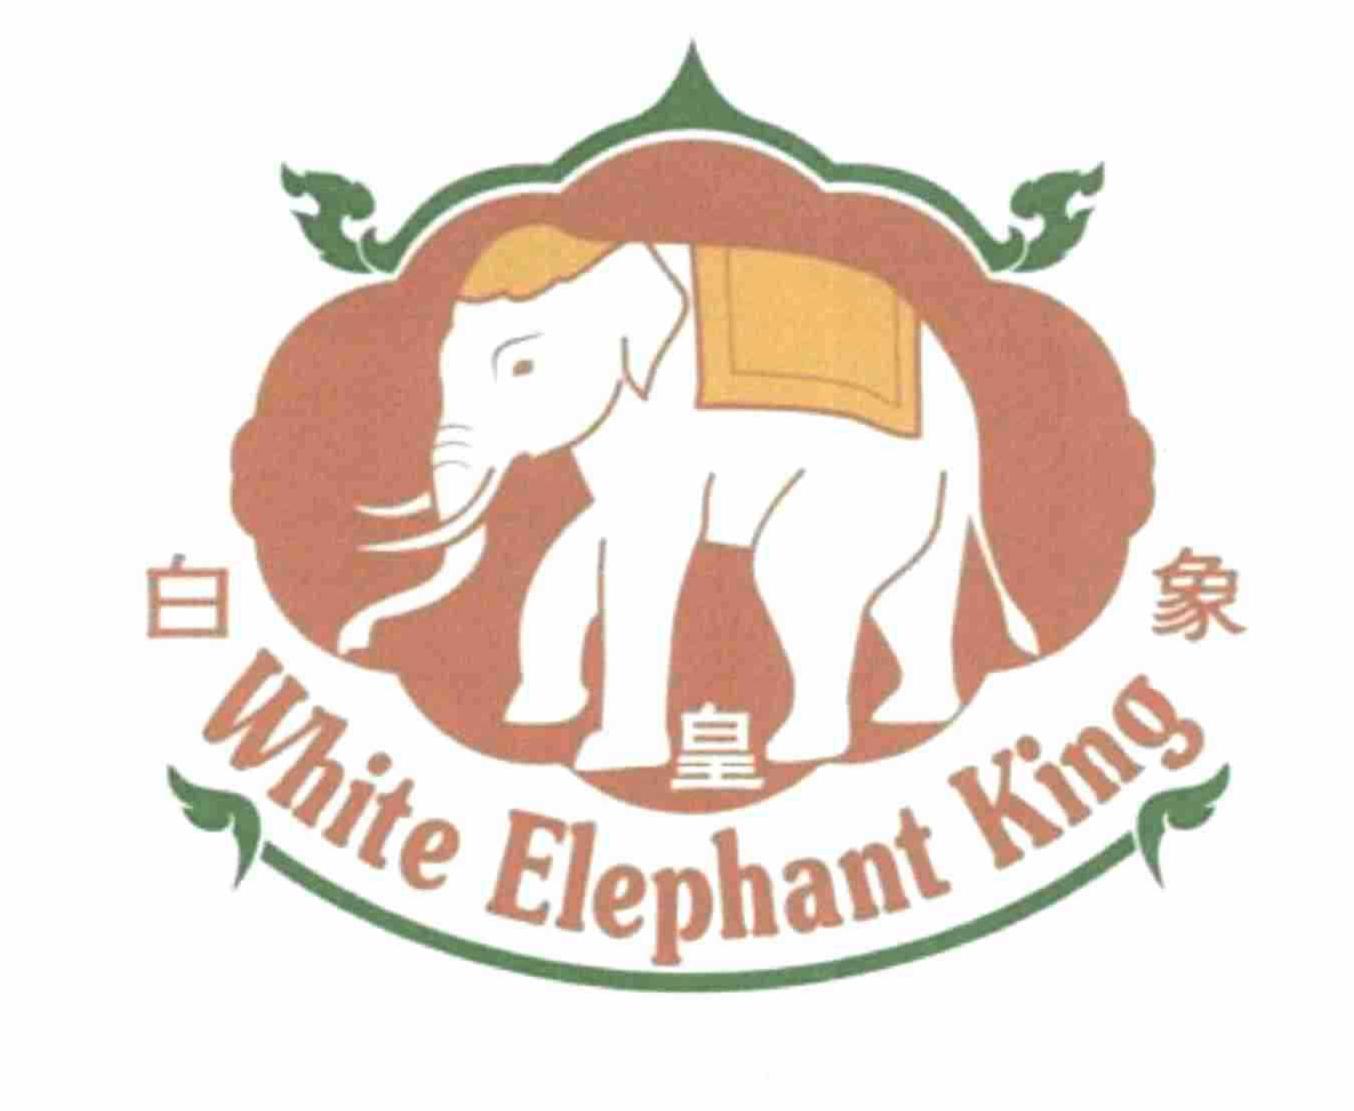  WHITE ELEPHANT KING